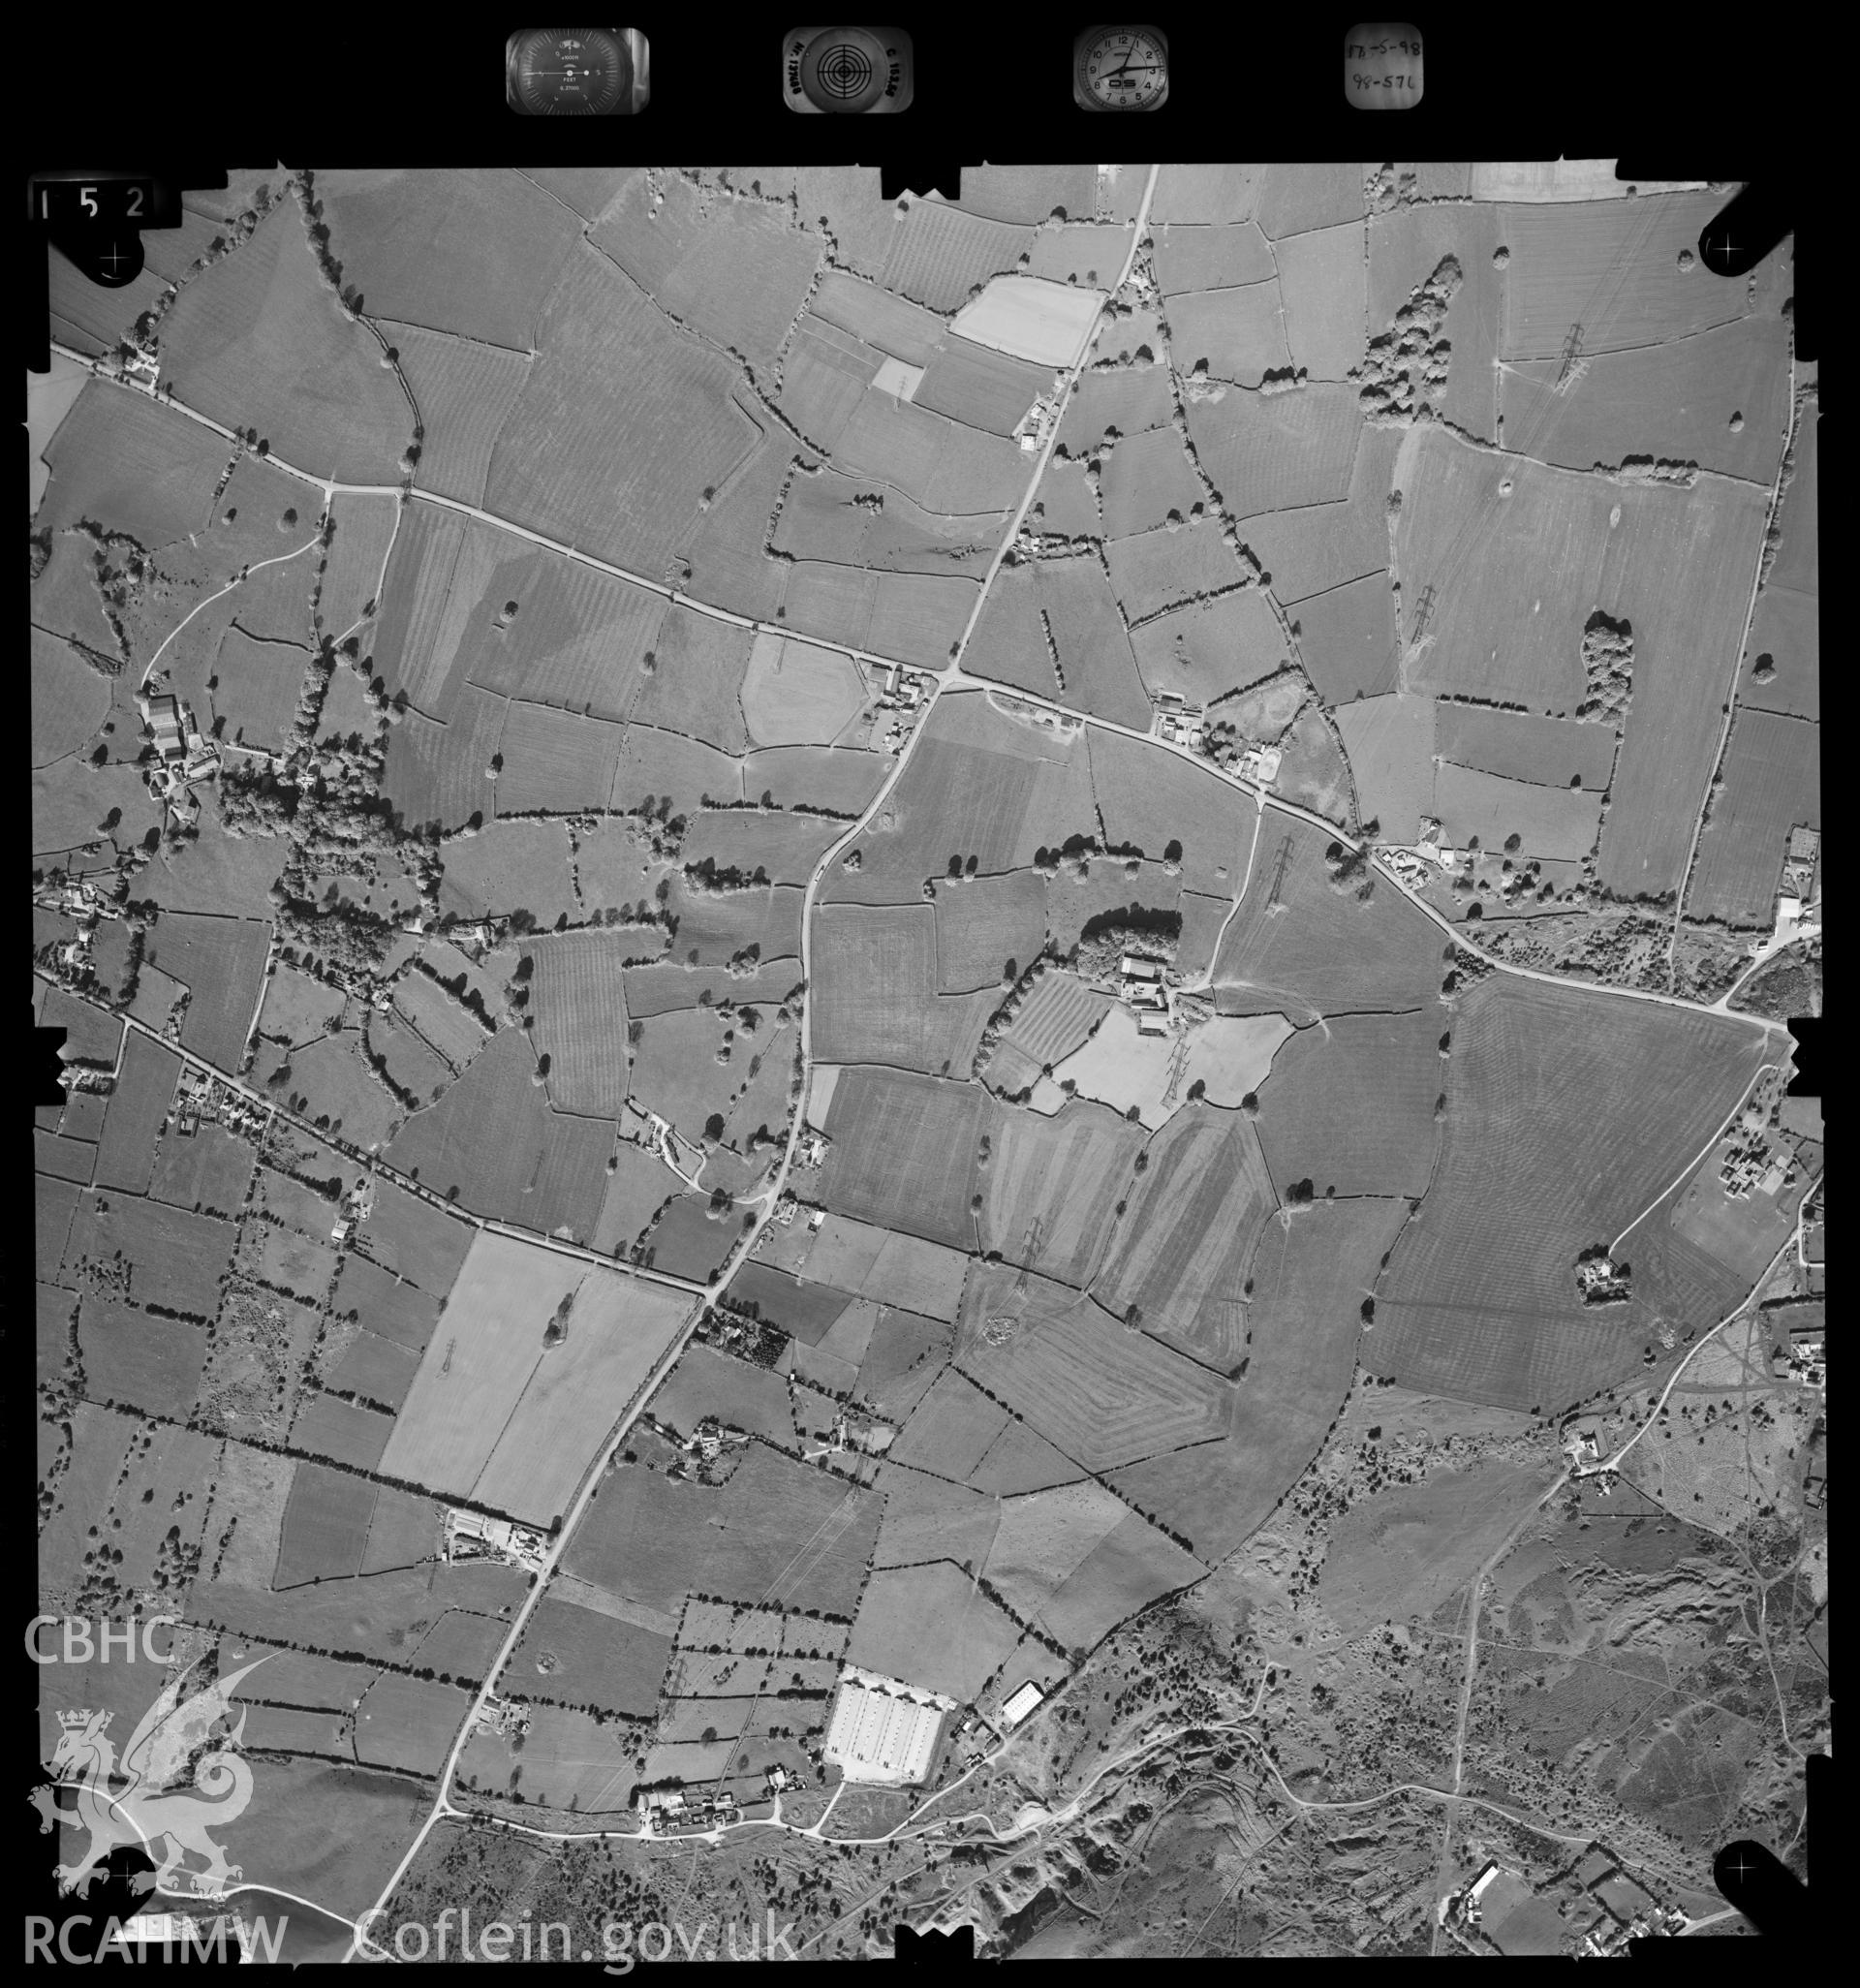 Digitized copy of an aerial photograph showing Pentre Halkyn. SJ1872.area, taken by Ordnance Survey, 1998.